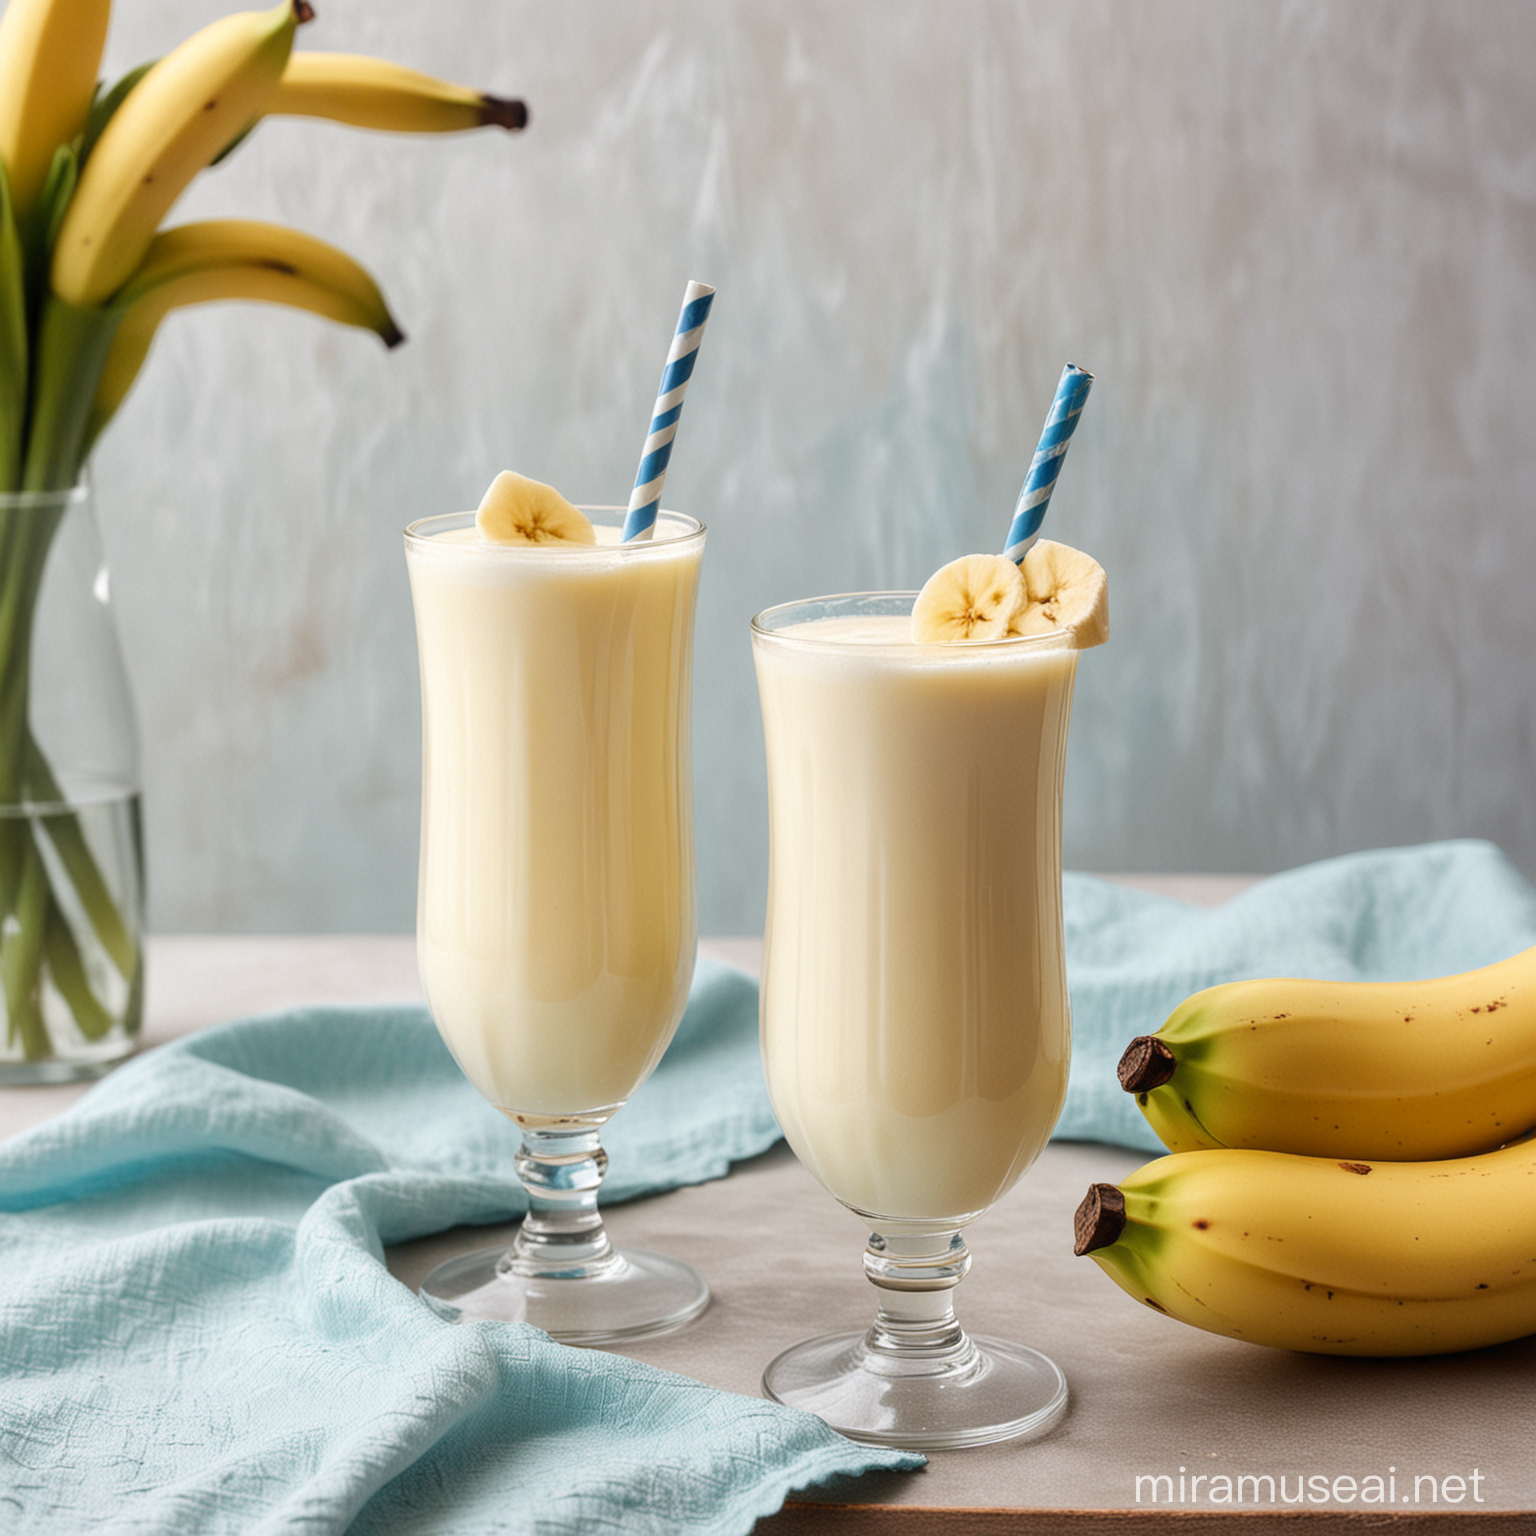 Refreshing Banana Milk Drink with Blue Java Bananas on White Tablecloth